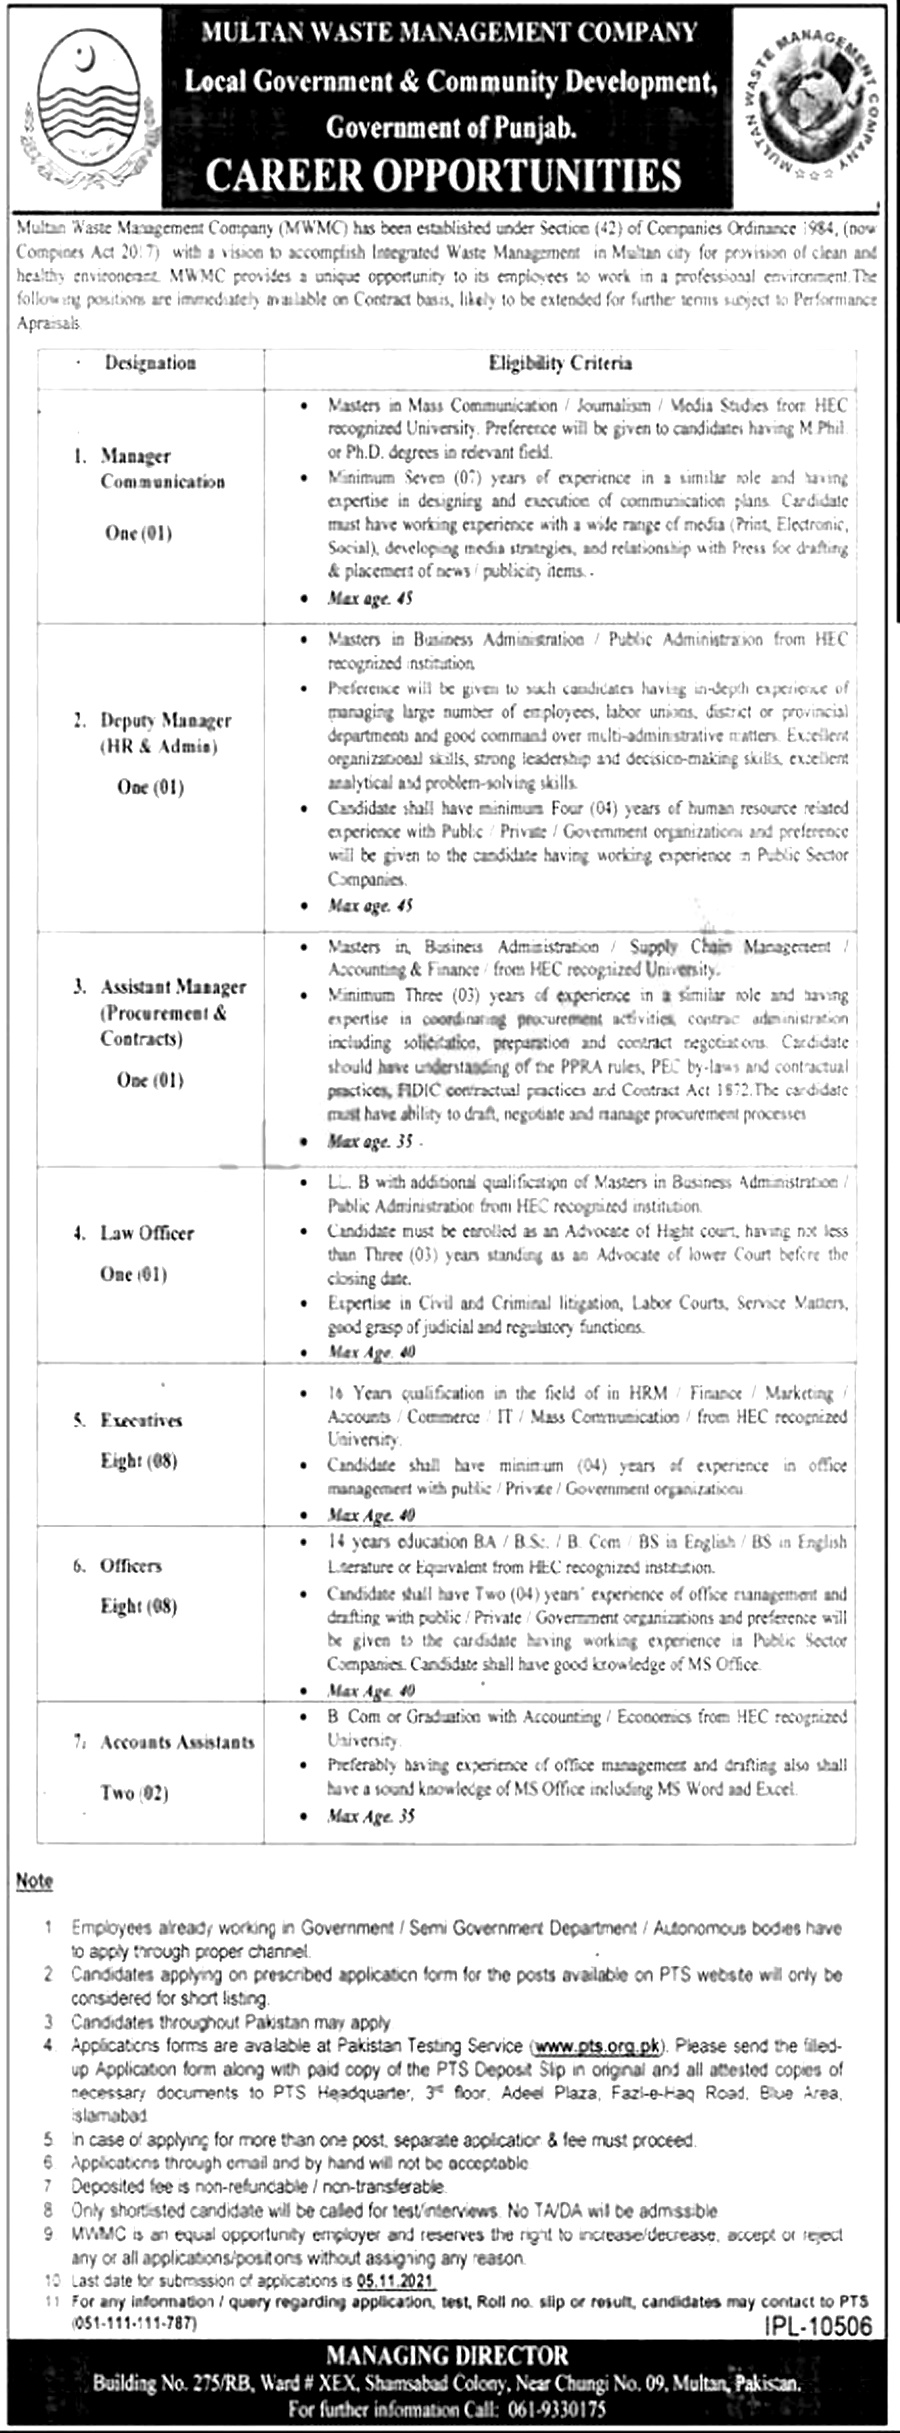 Multan Waste Management Company PTS Jobs in MWMC 2023 